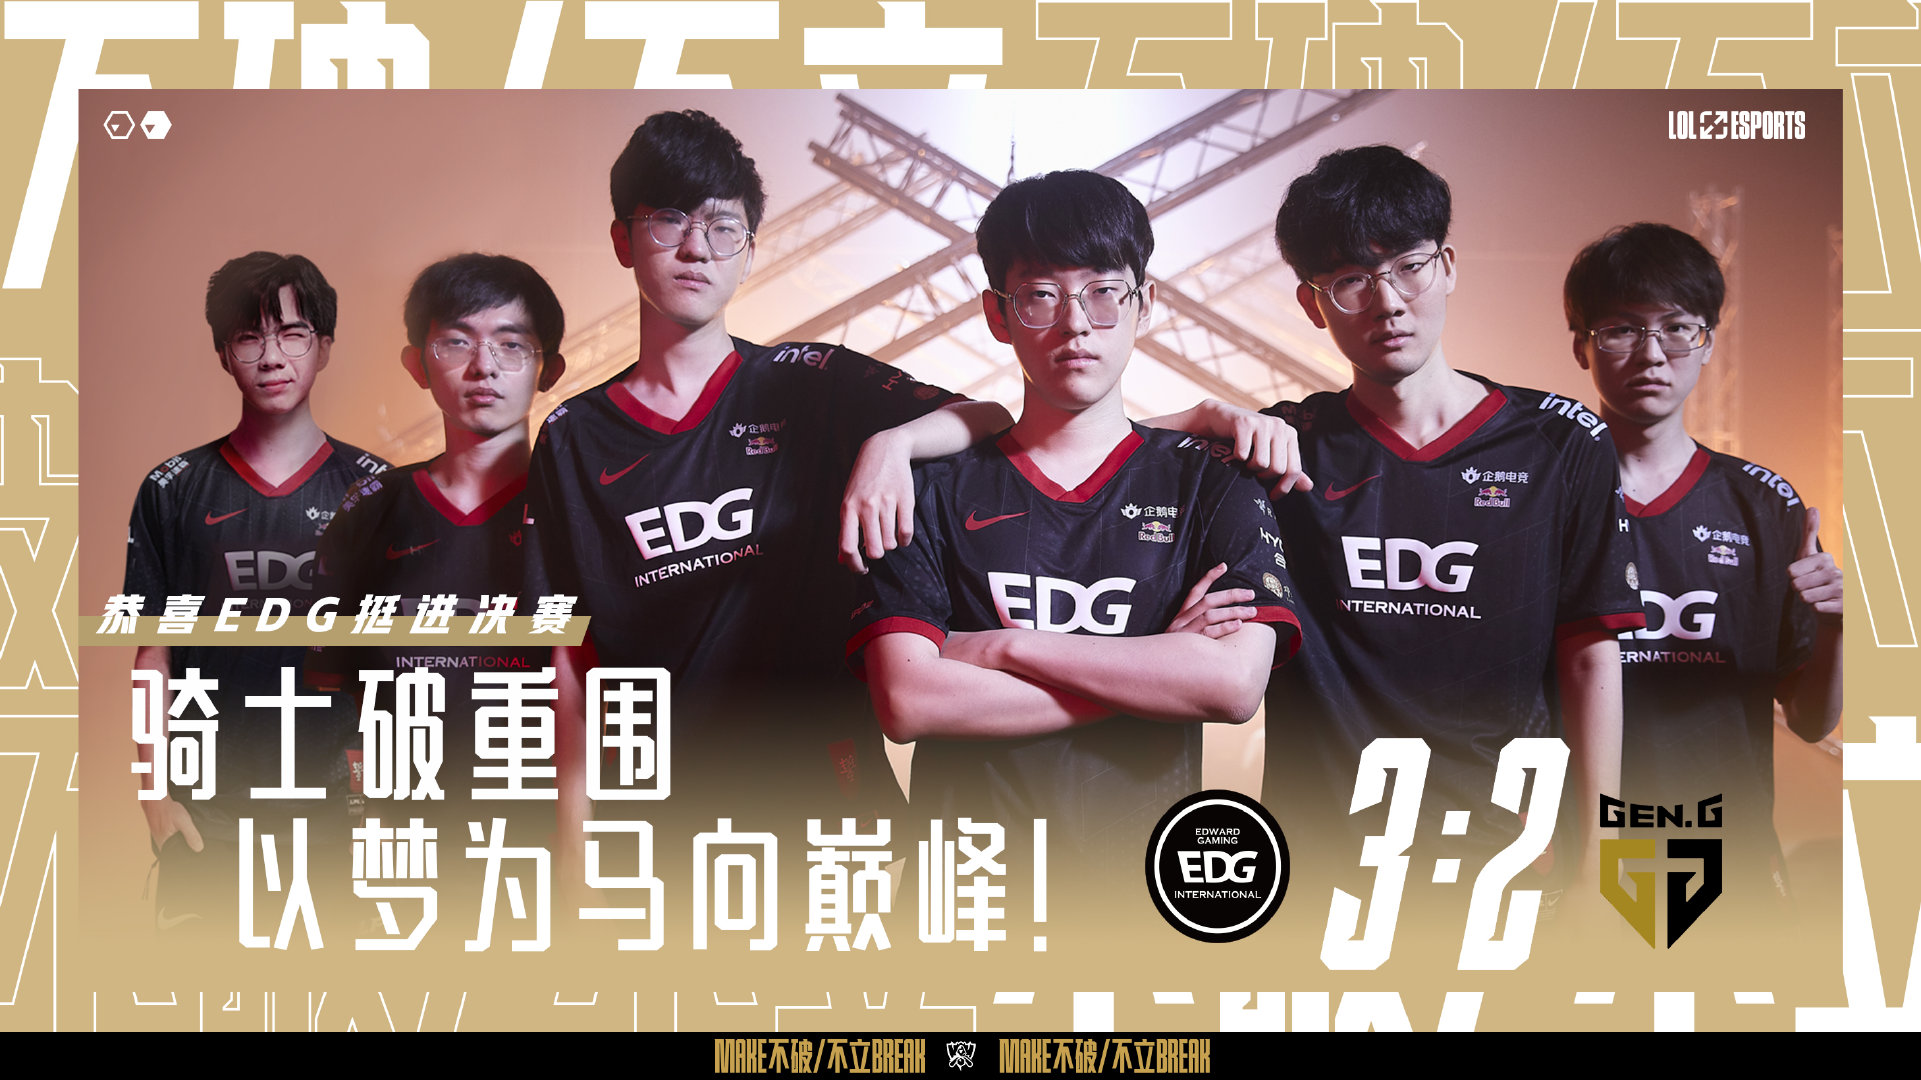 EDG银龙骑士冠军皮肤海报正式发布|edg_新浪新闻